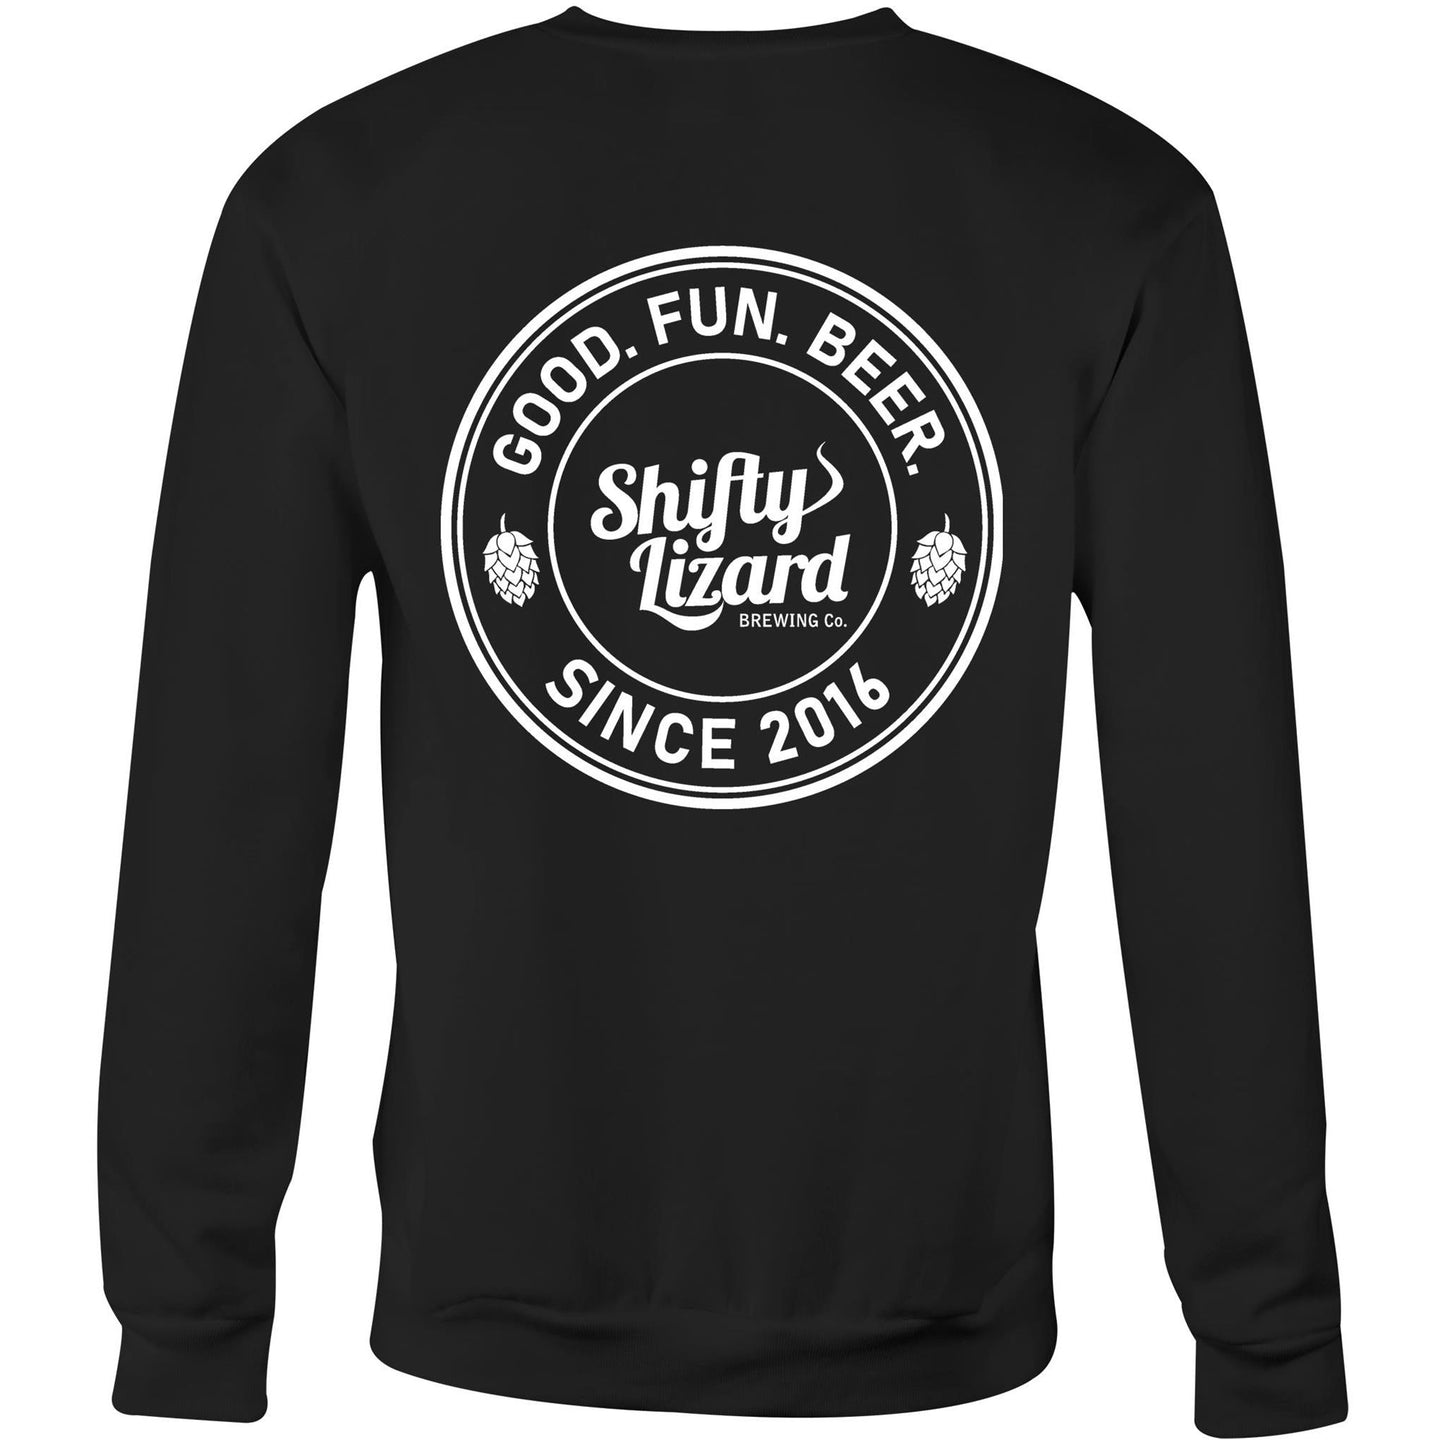 Good Fun Beer - AS Colour United - Crew Sweatshirt